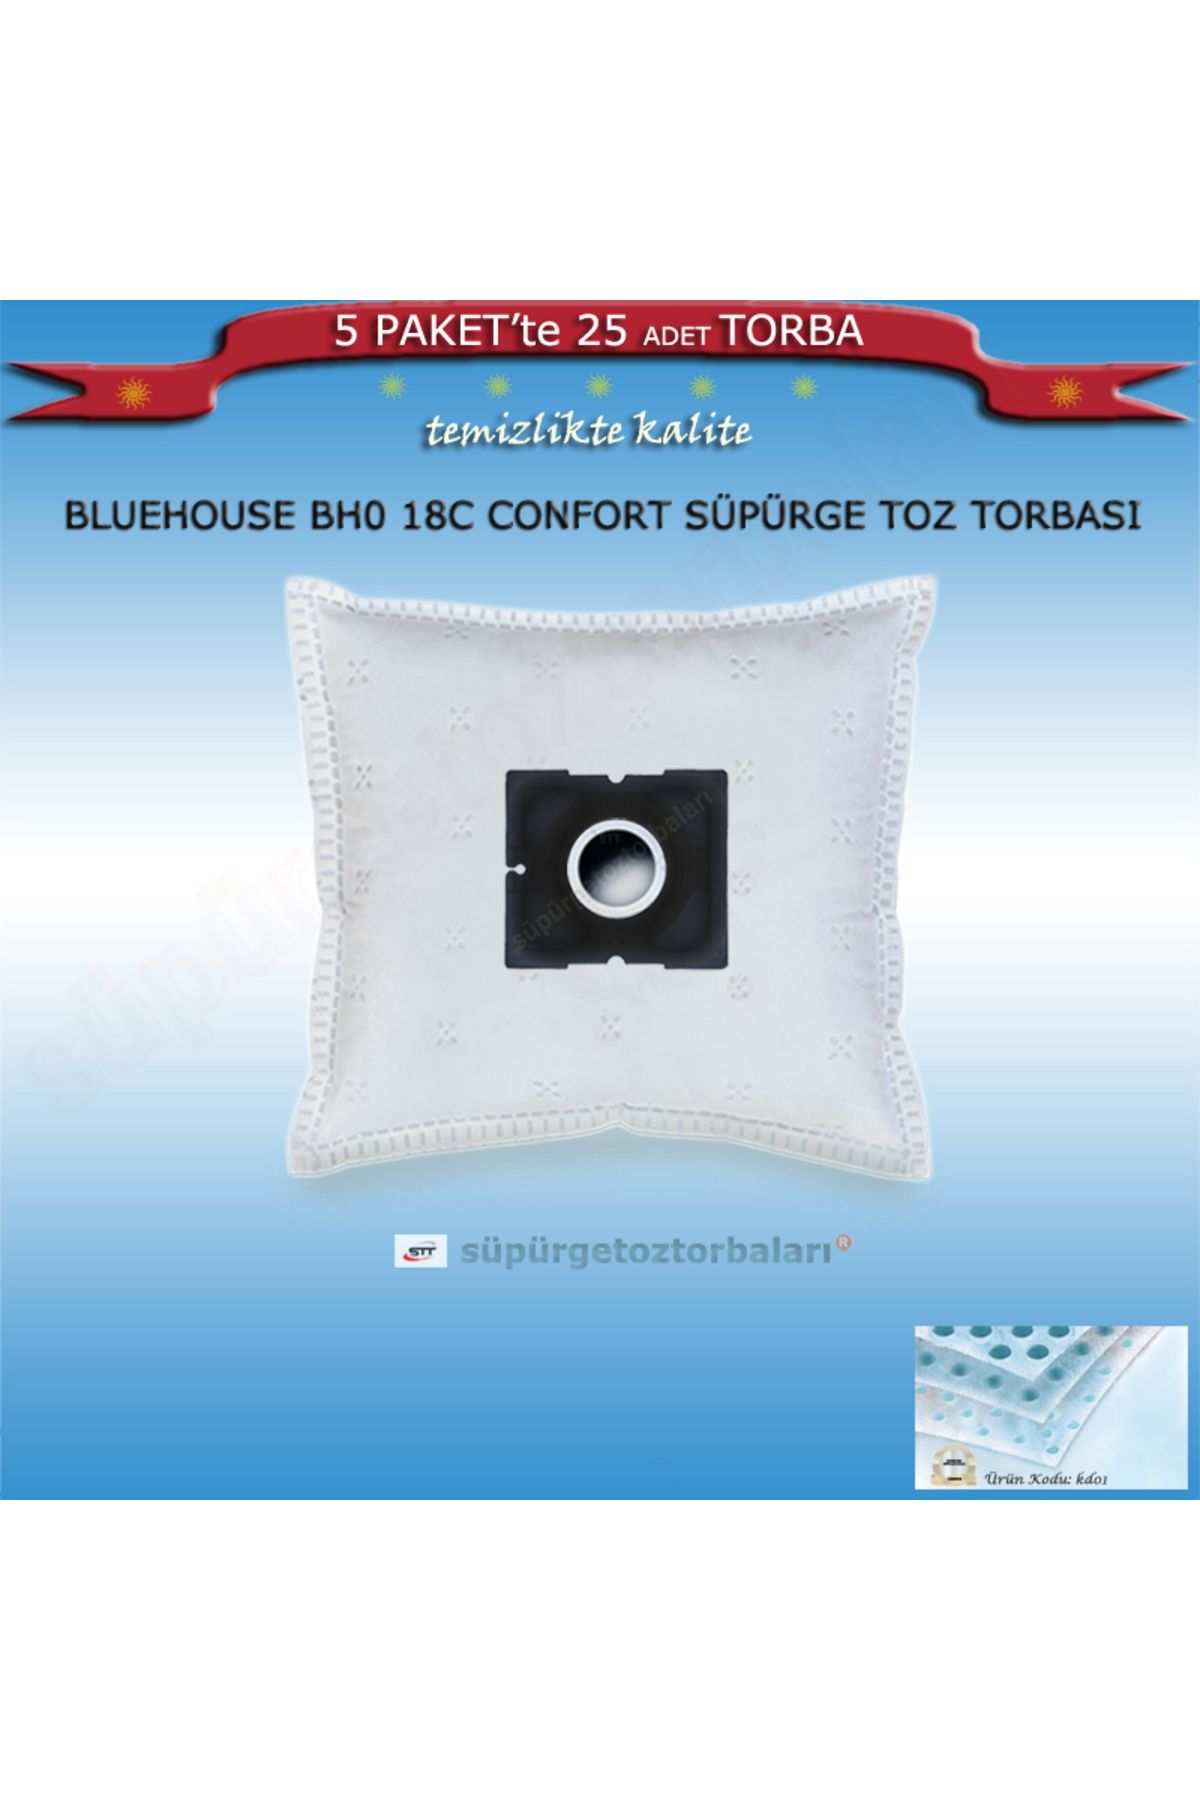 BLUE HOUSE Bluehouse Bh0 18c Confort Süpürge Toz Torbası 25 Adet Torba Kd01